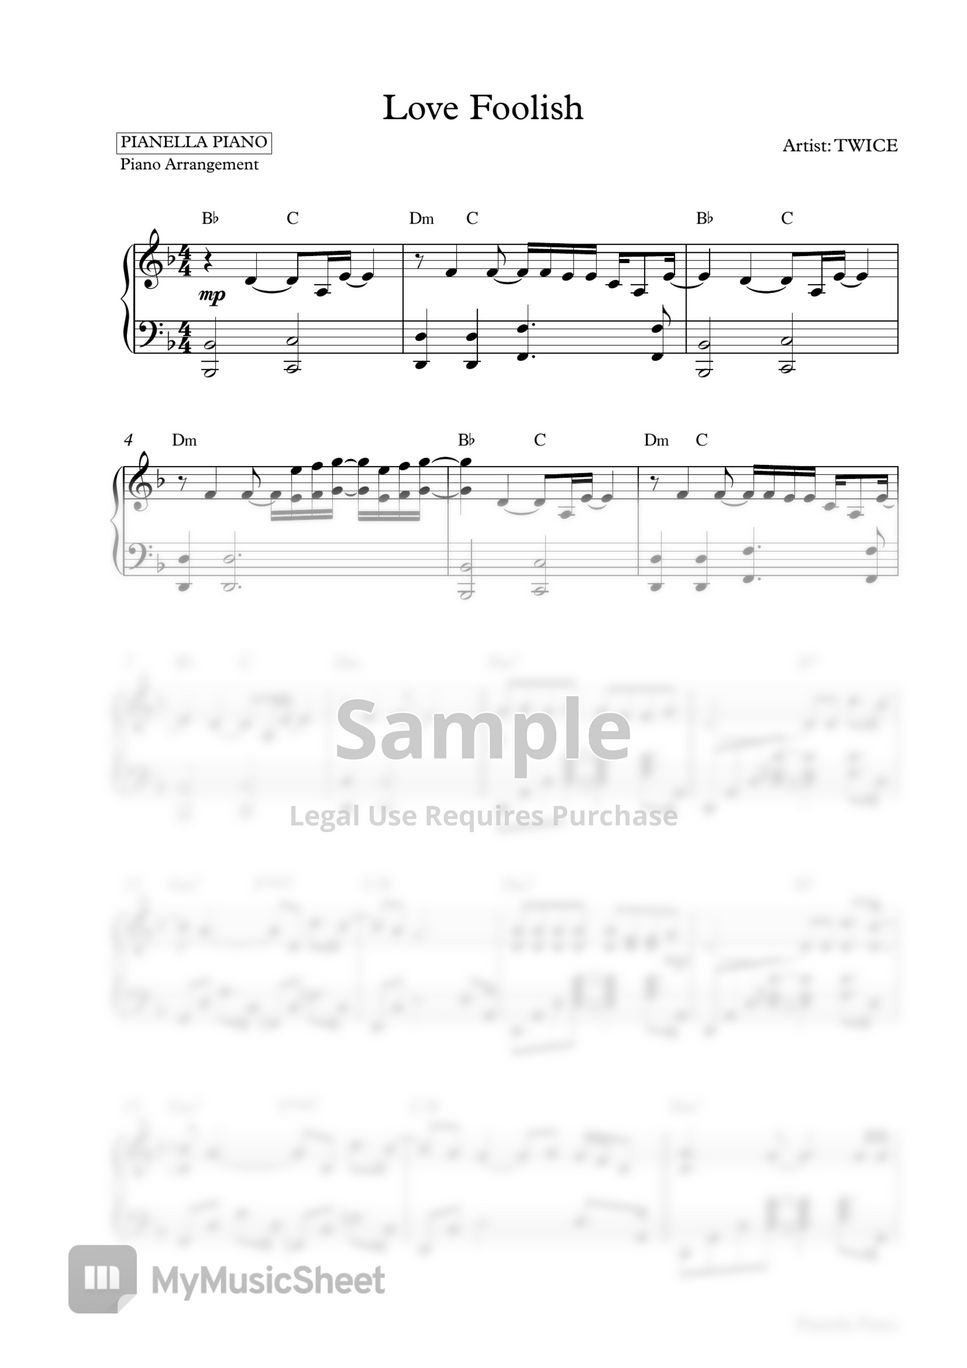 TWICE - Love Foolish (Piano Sheet) by Pianella Piano